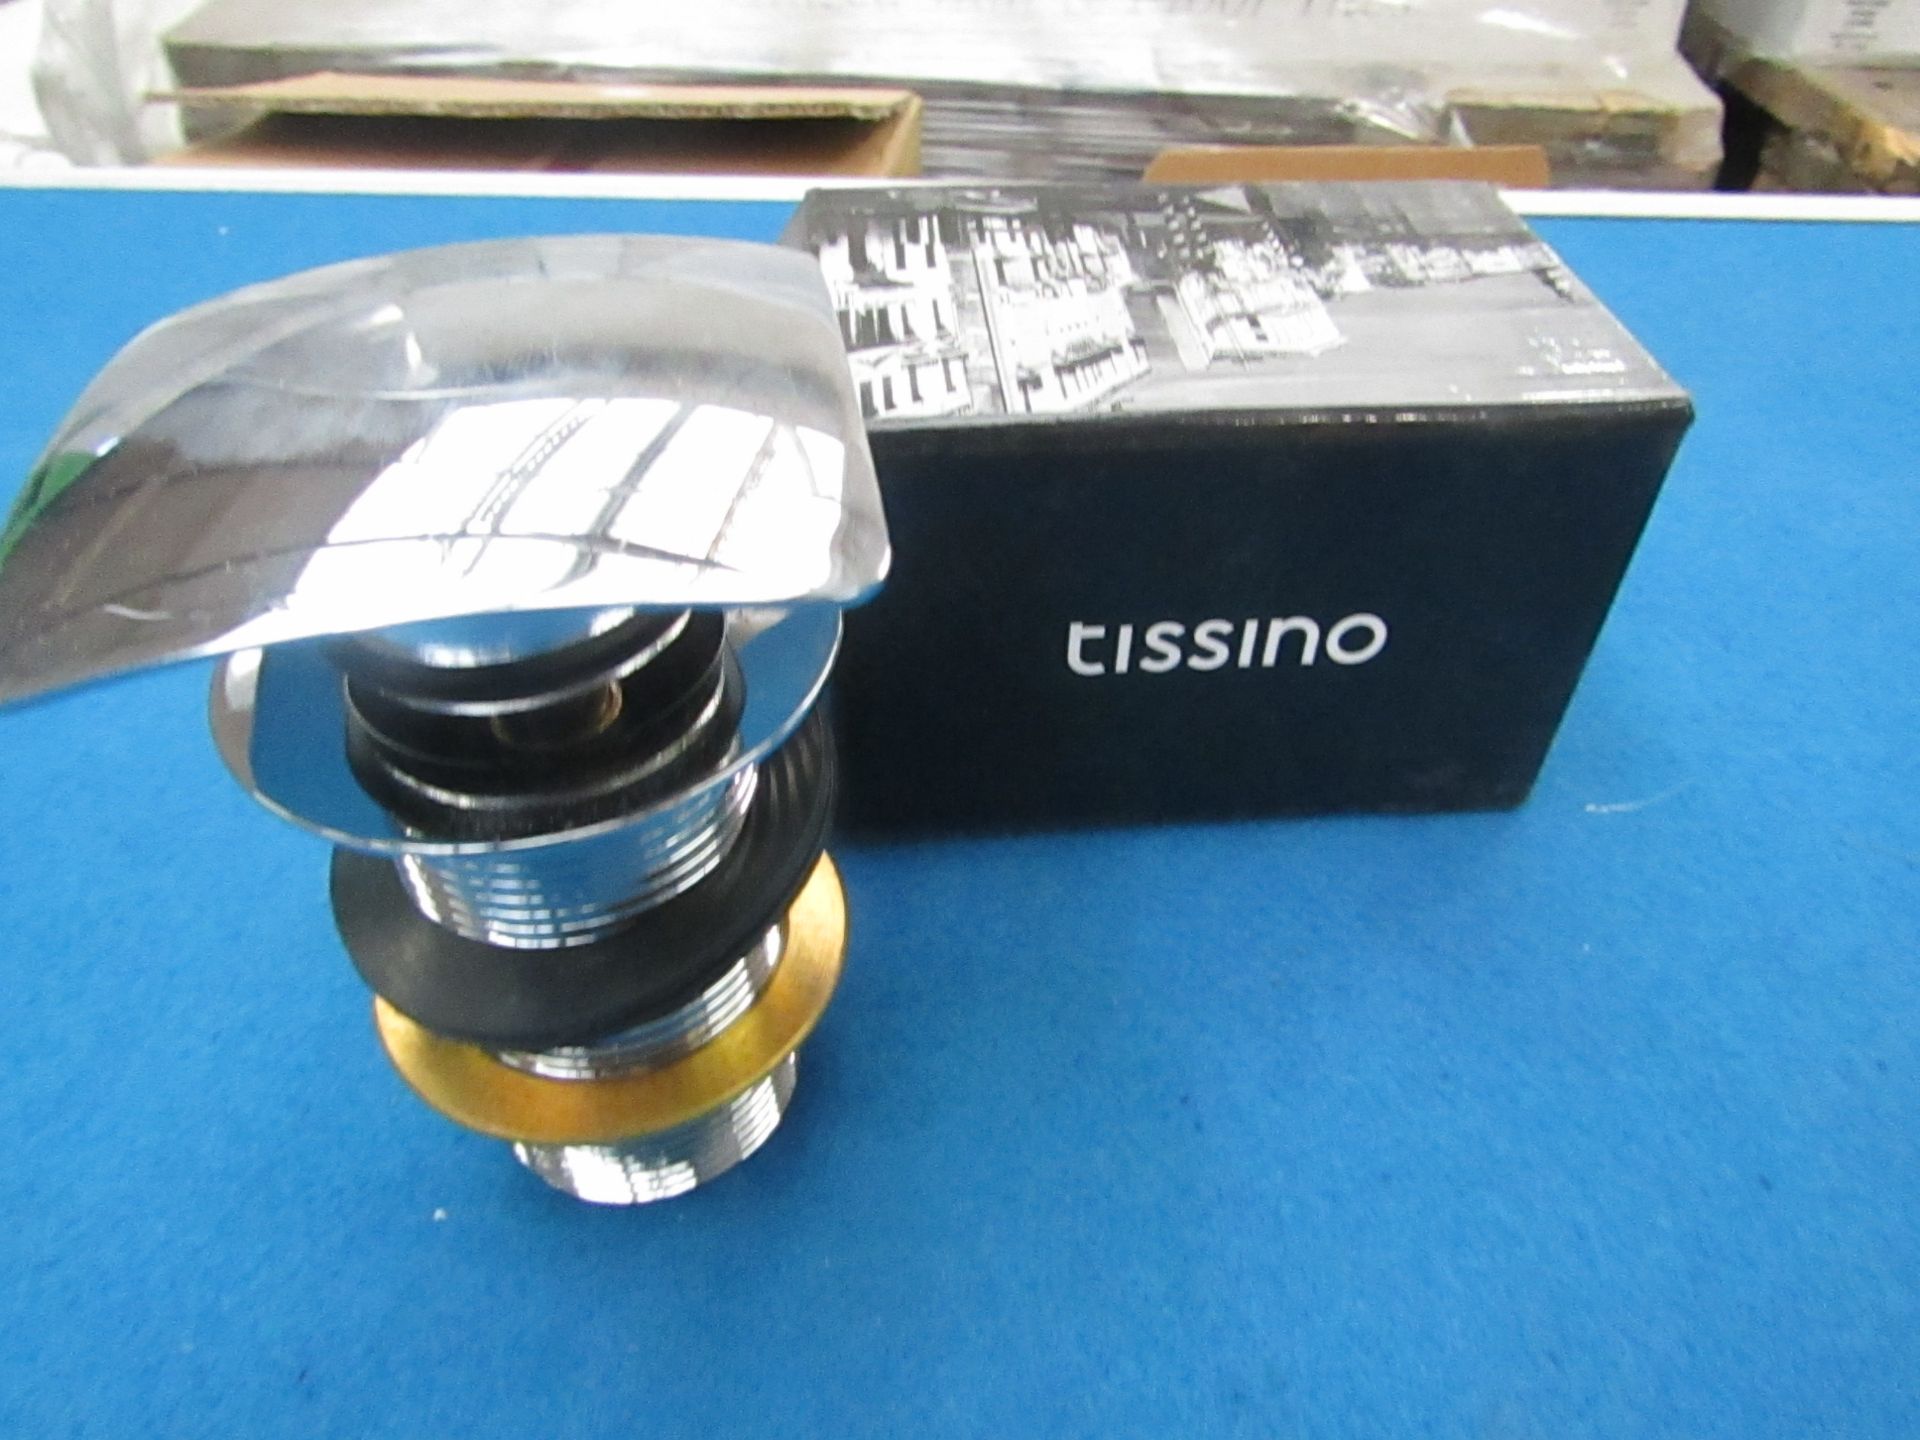 TISSINO - Square basin push waste -1 1/4, new and boxed.